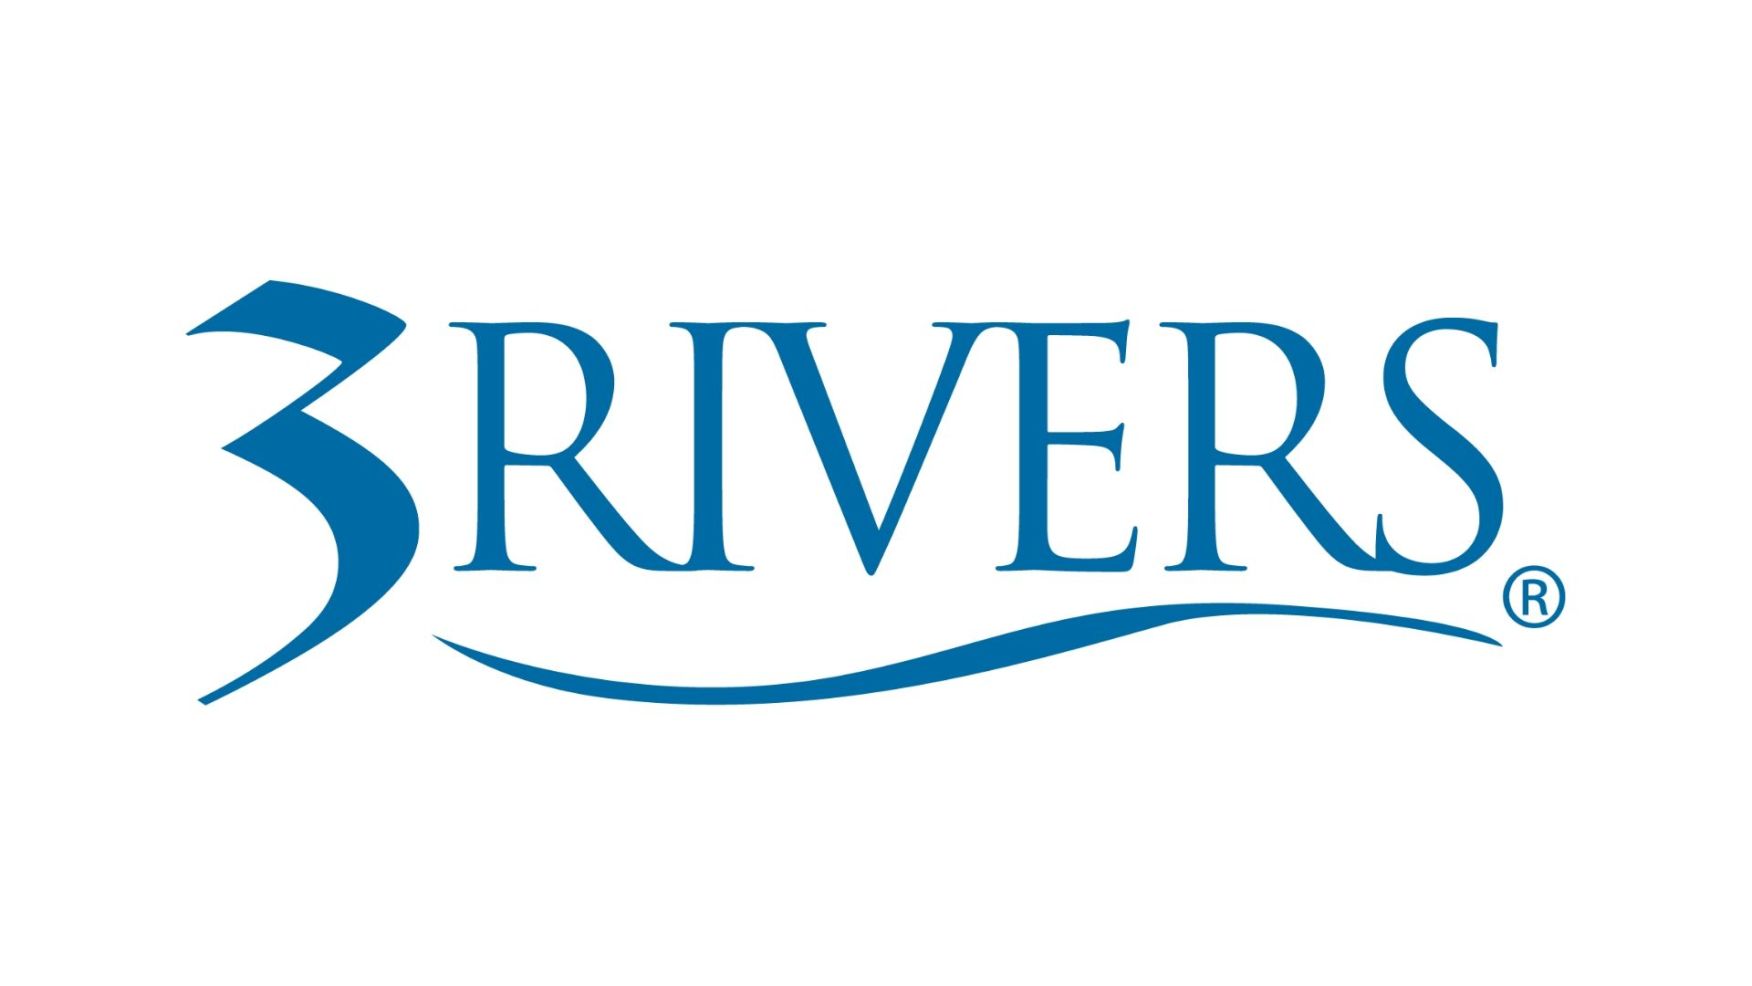 3 Rivers Credit Union logo